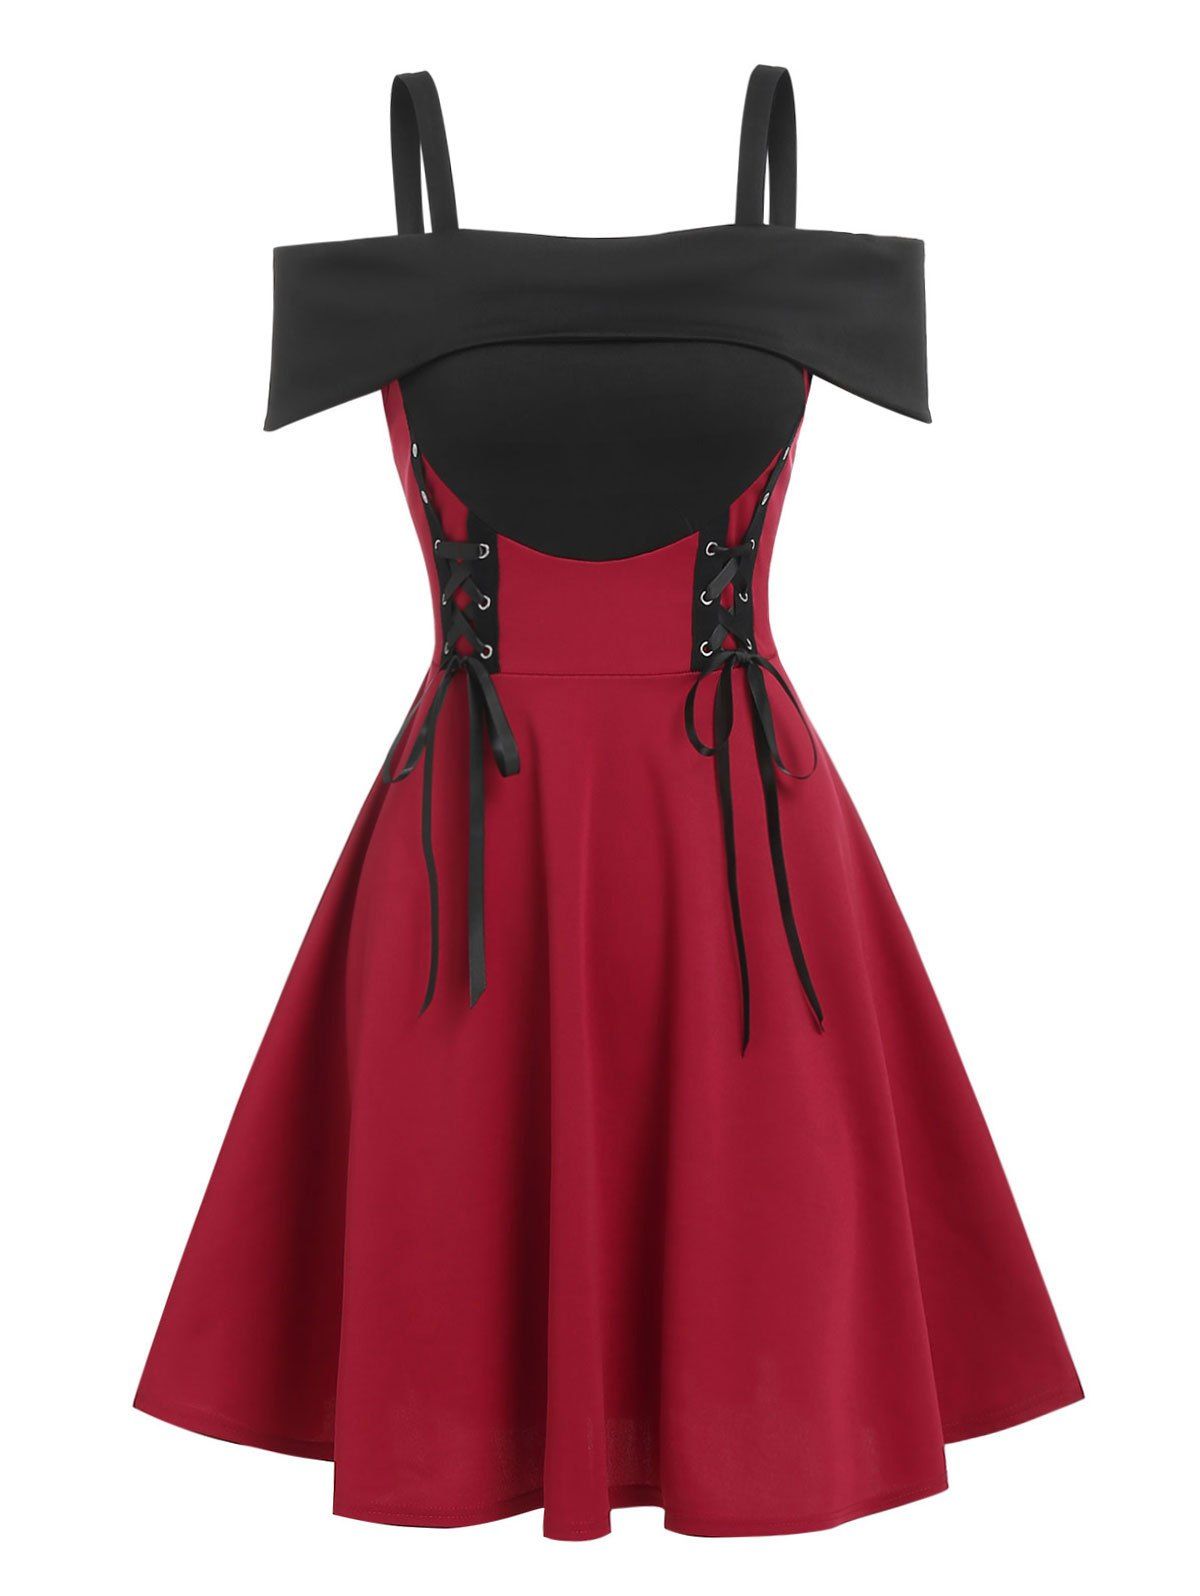 Plaid Cold Shoulder Lace Up Dress - RED 2XL